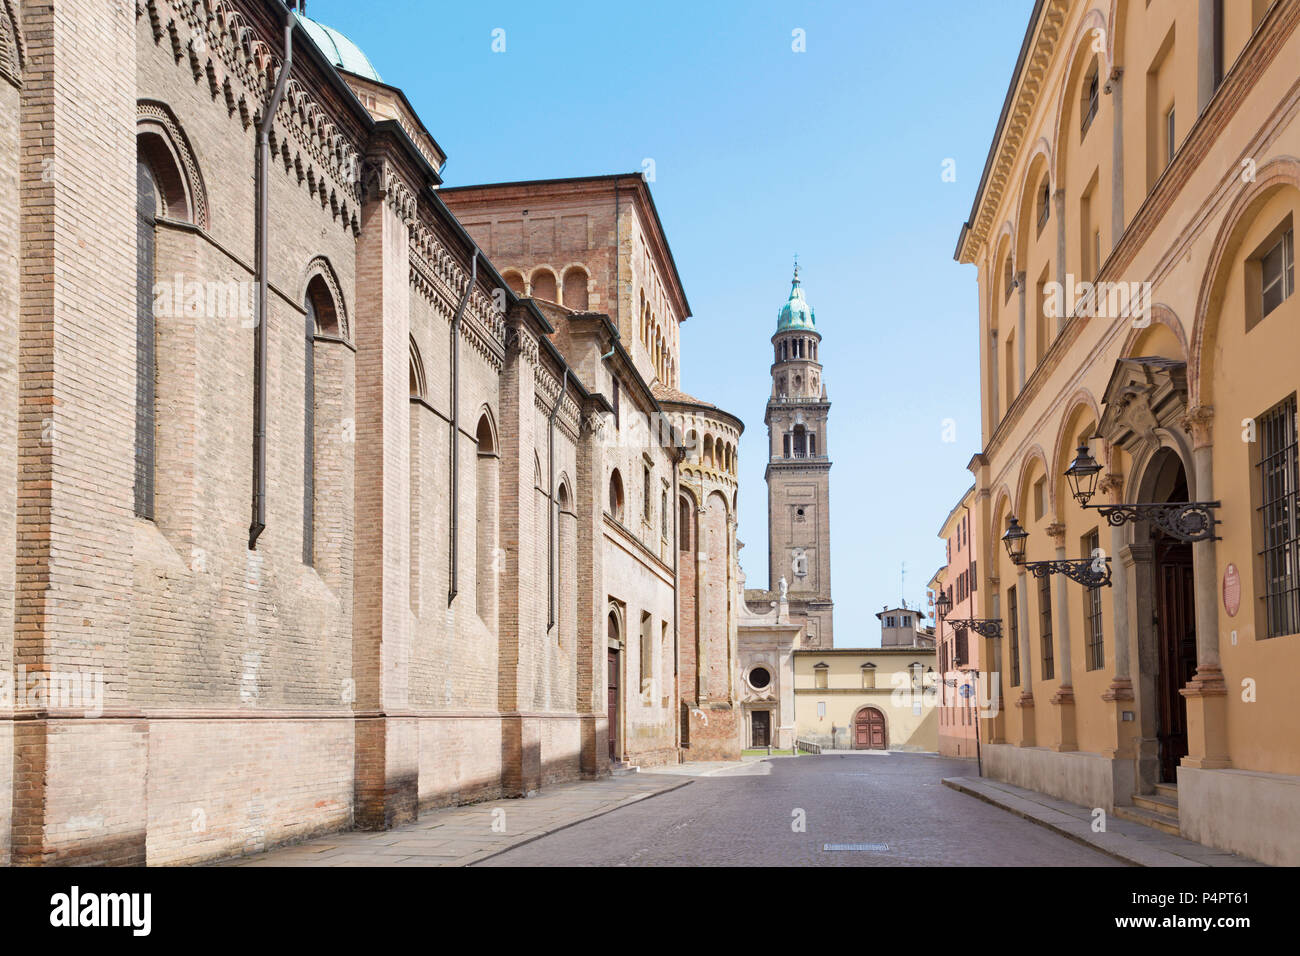 Parma - The Duomo and baroque church Chiesa di San Giovanni Evangelista (John the Evangelist). Stock Photo